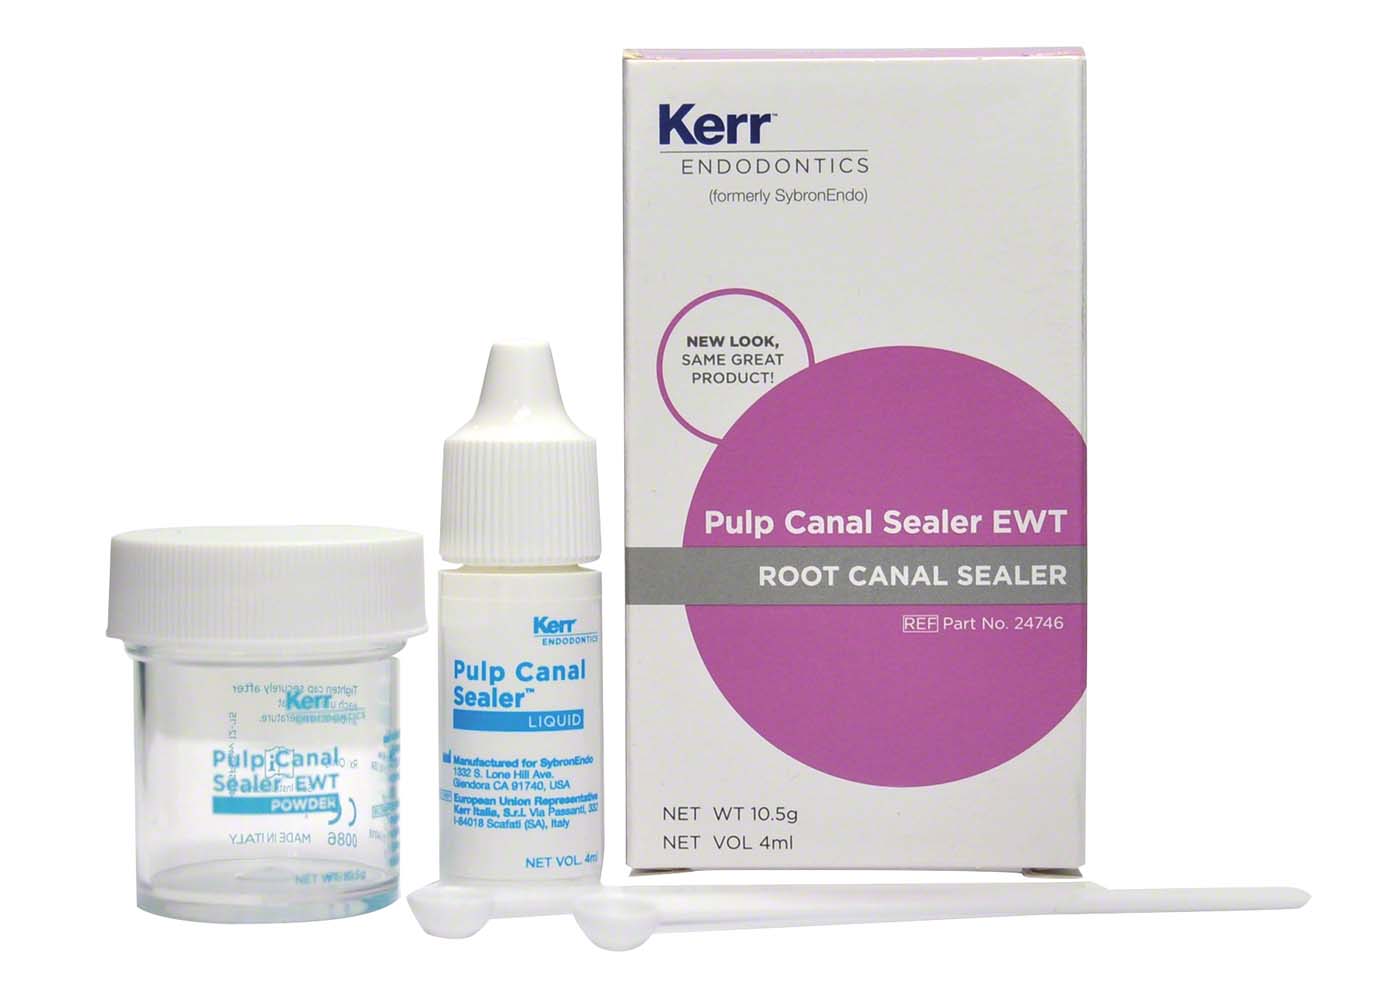 Pulp Canal Sealer™ Kerr